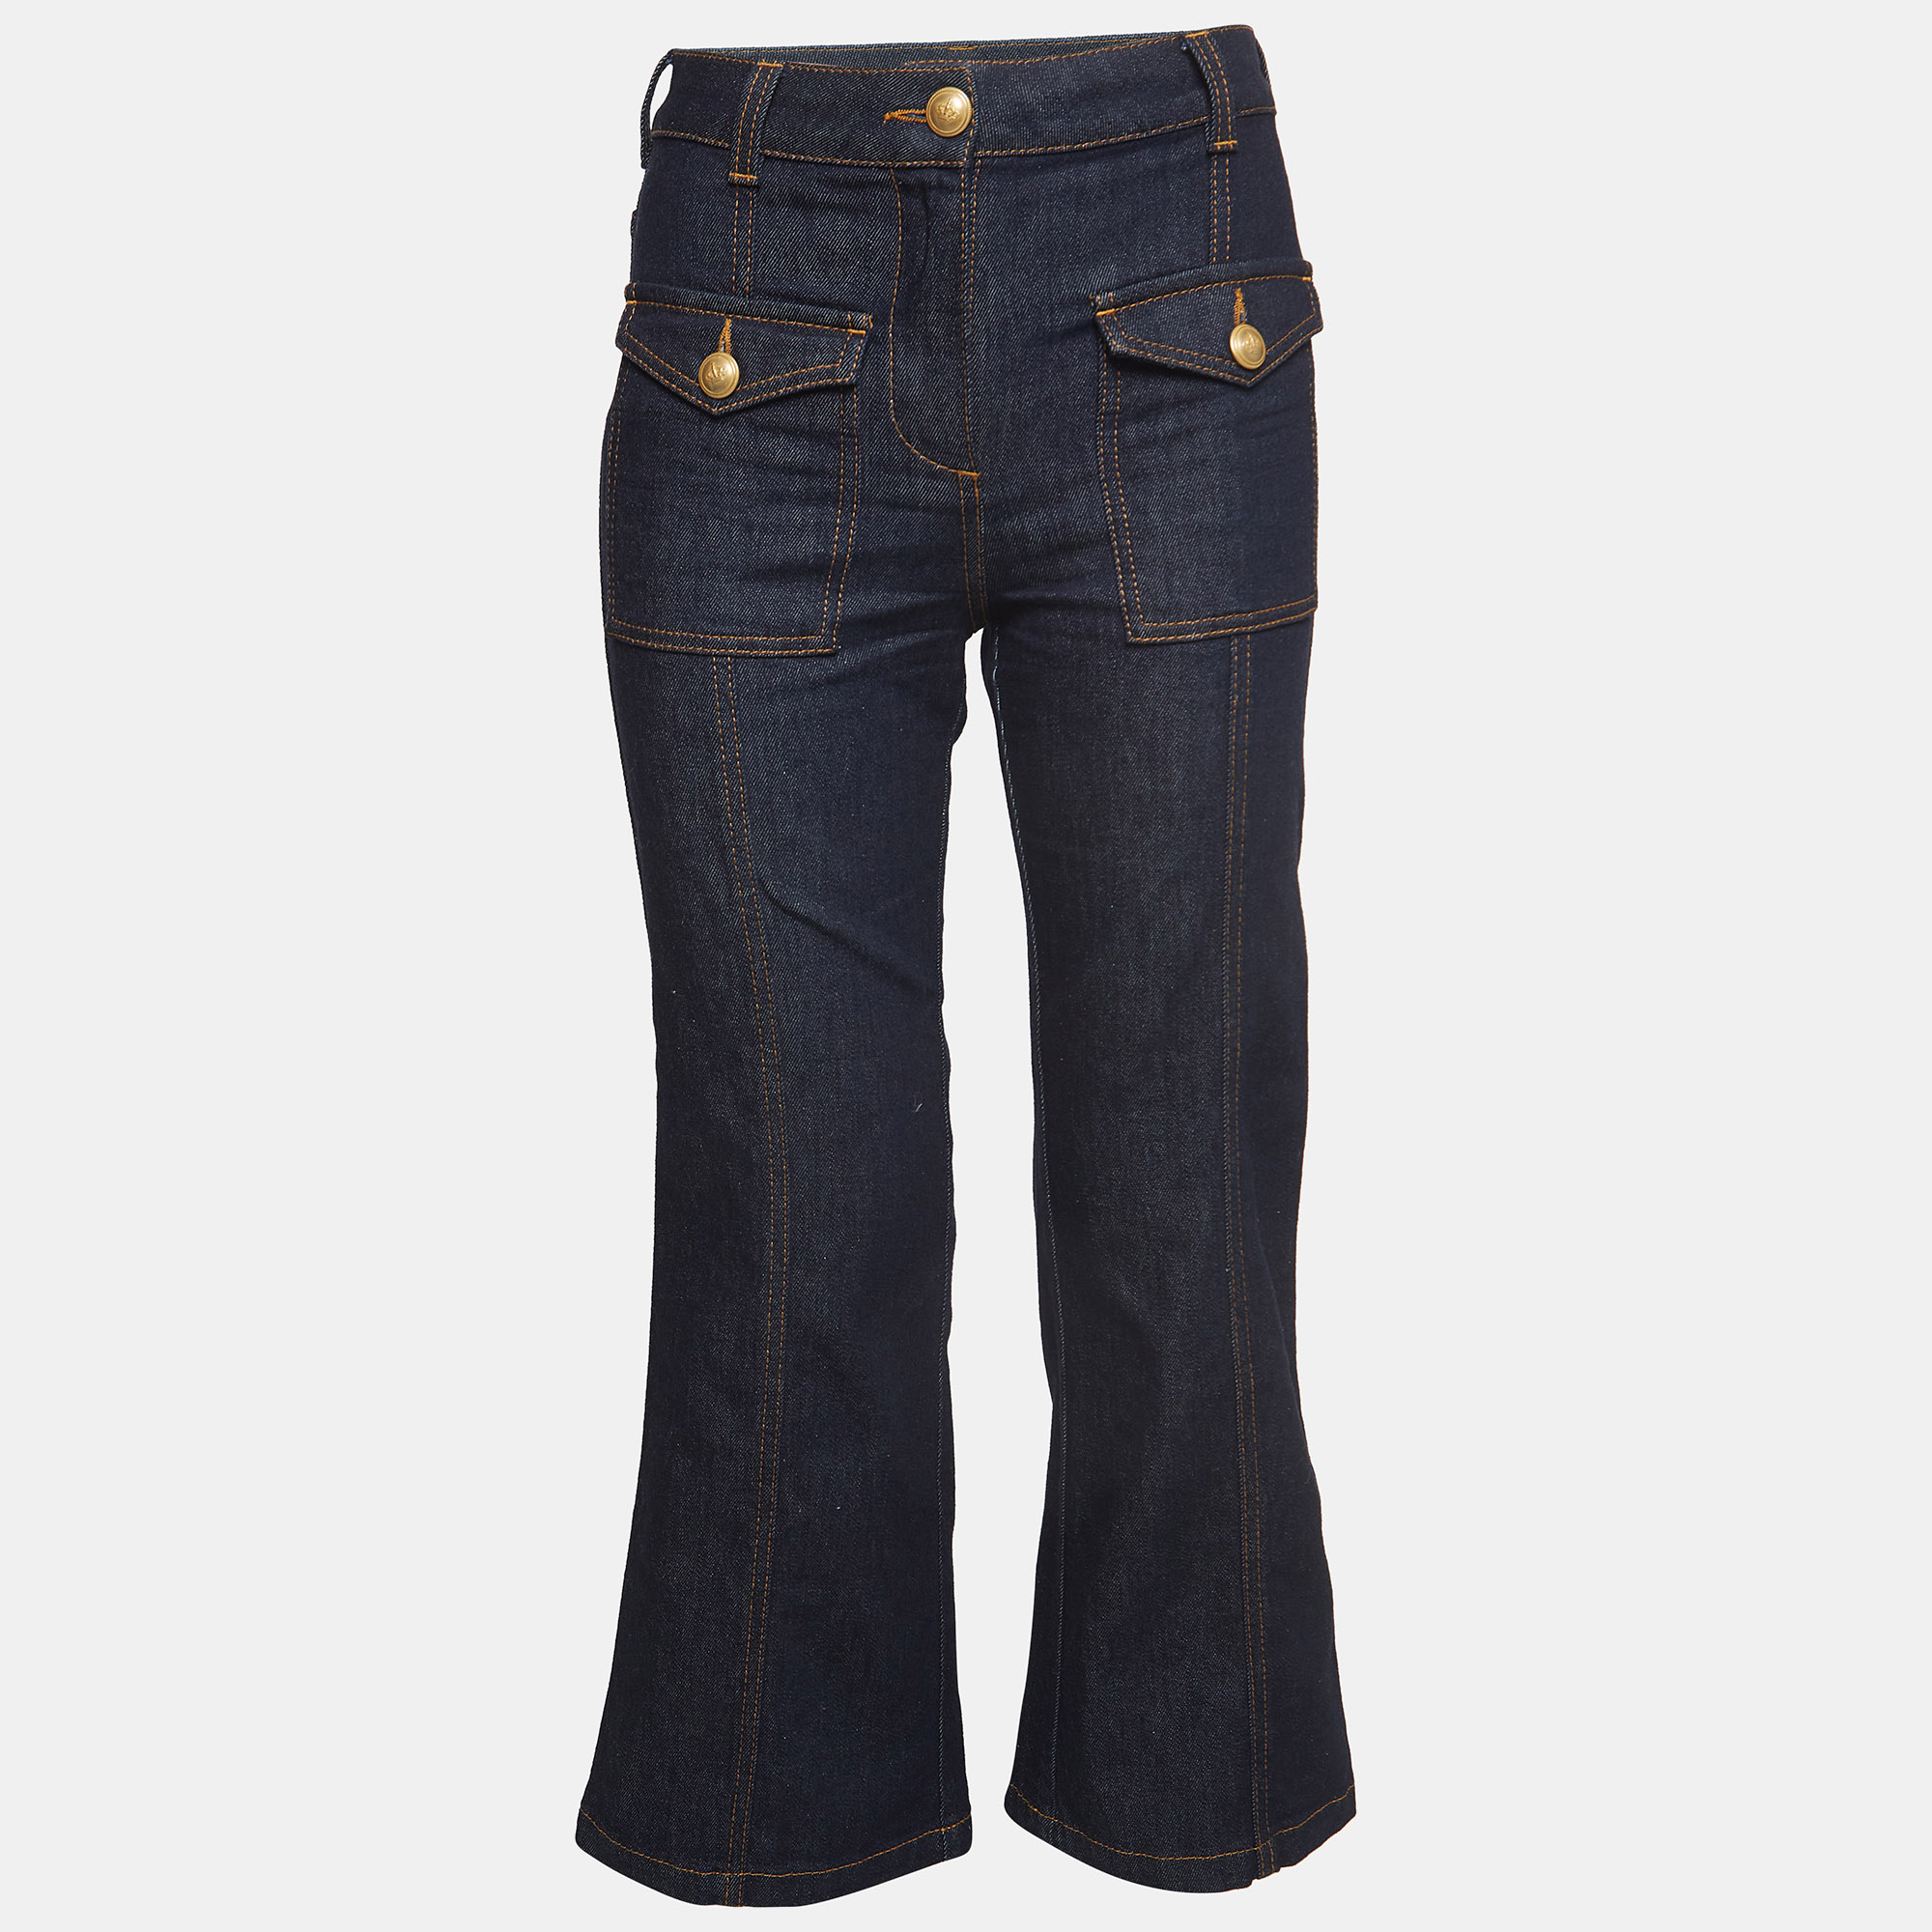 Palm angels blue denim marine flare stretched jeans s waist 24''